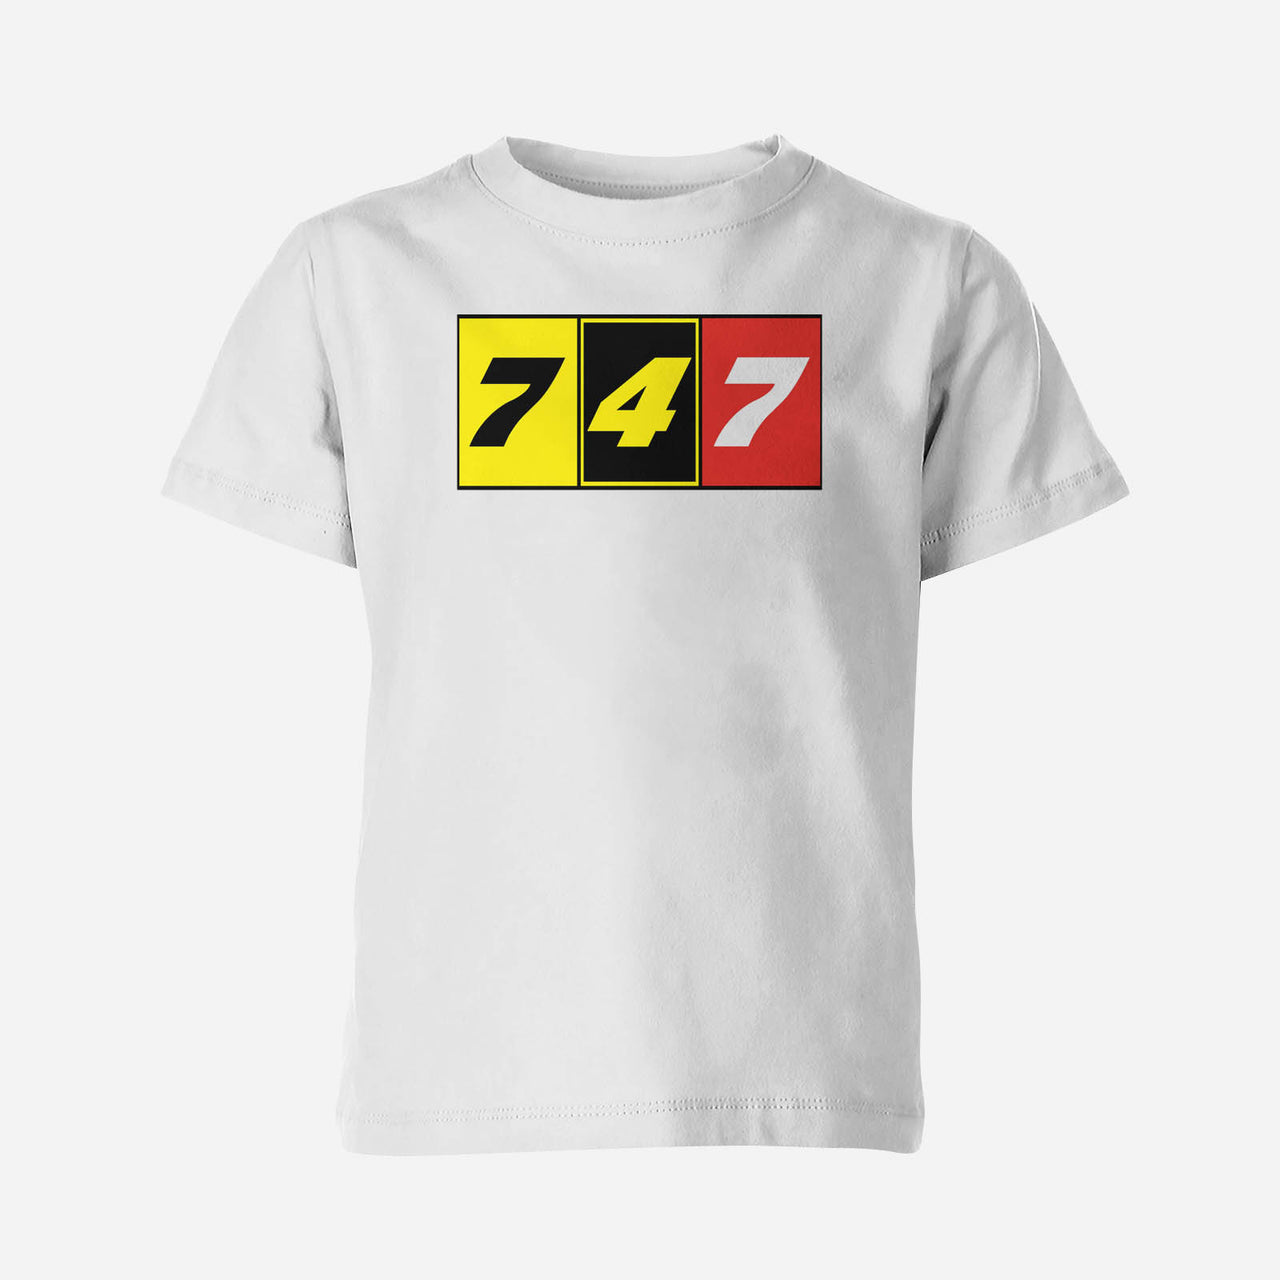 Flat Colourful 747 Designed Children T-Shirts